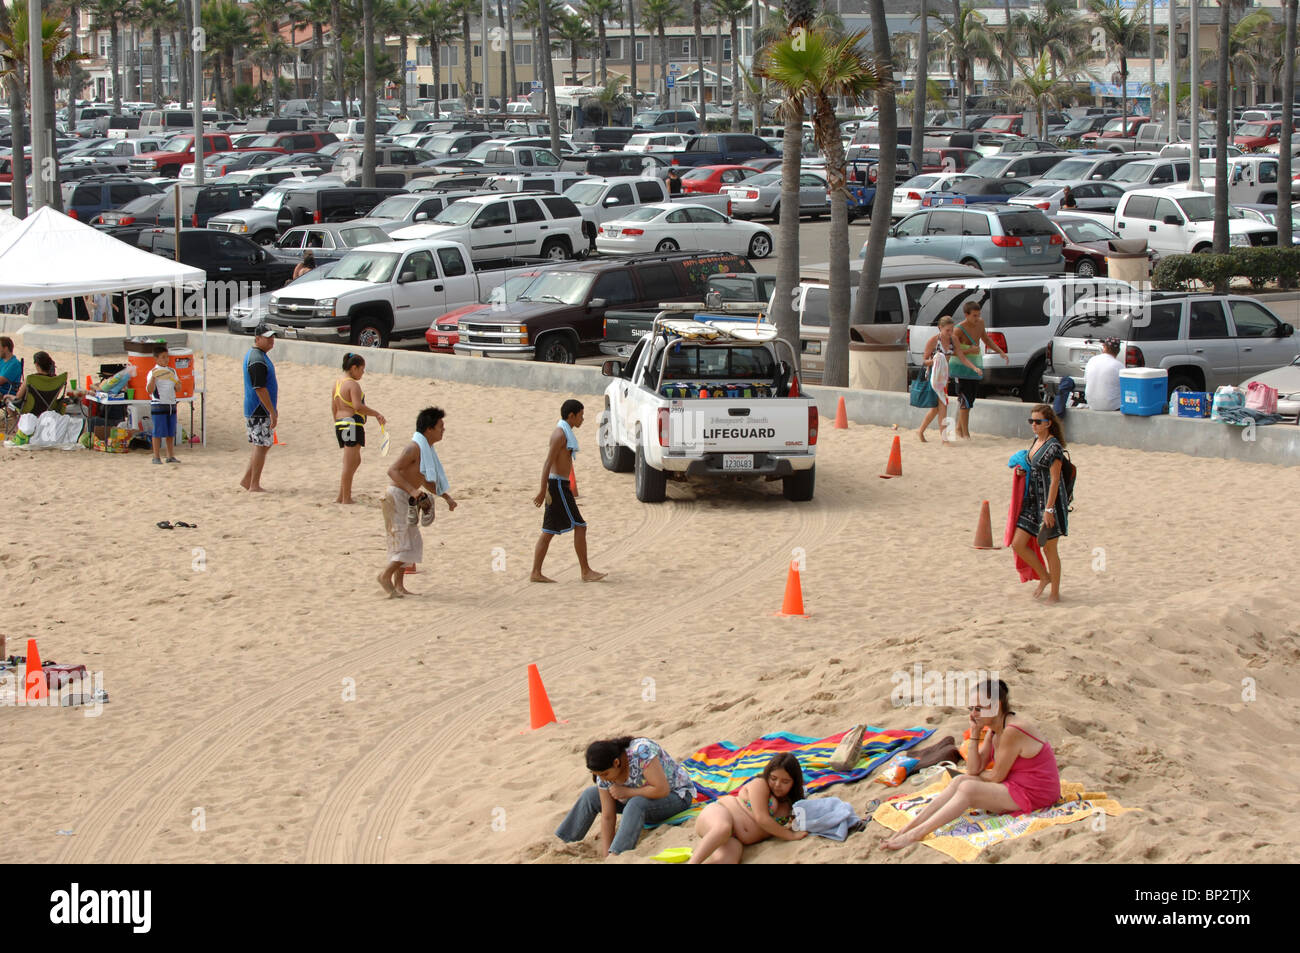 Lifeguard response vehicle driving near the shoreline at Newport Beach, California Stock Photo